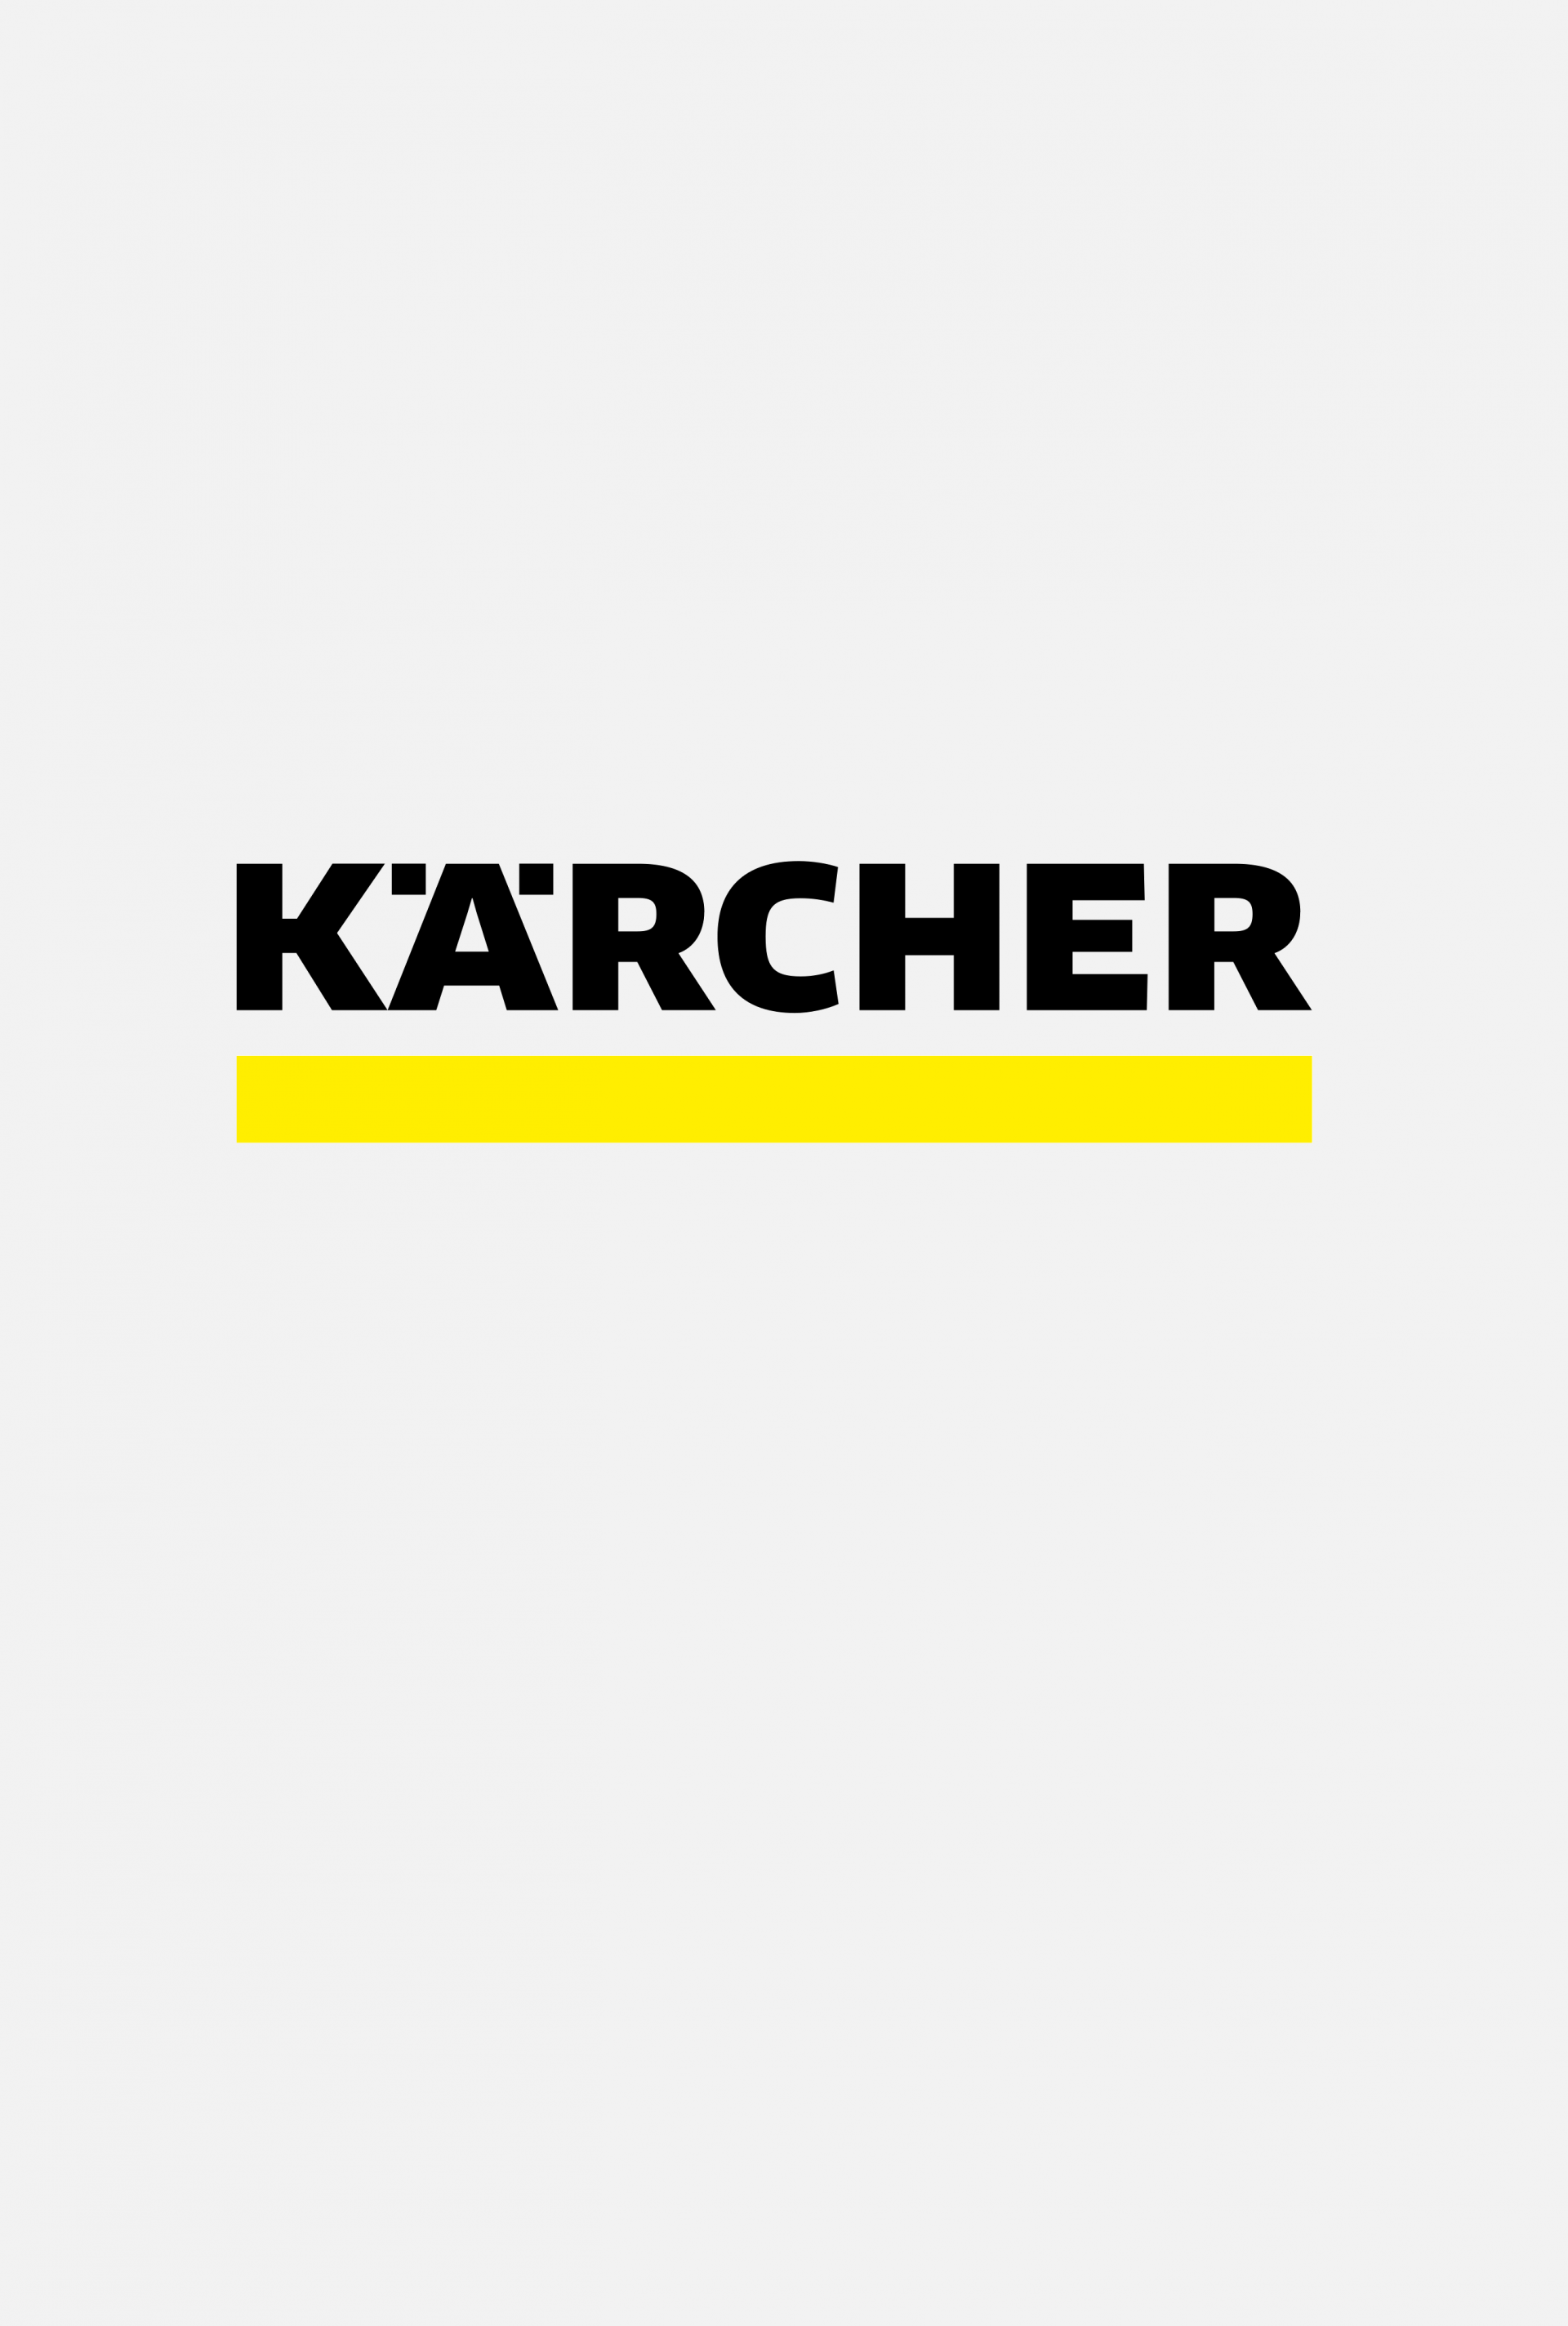 karcher - mob